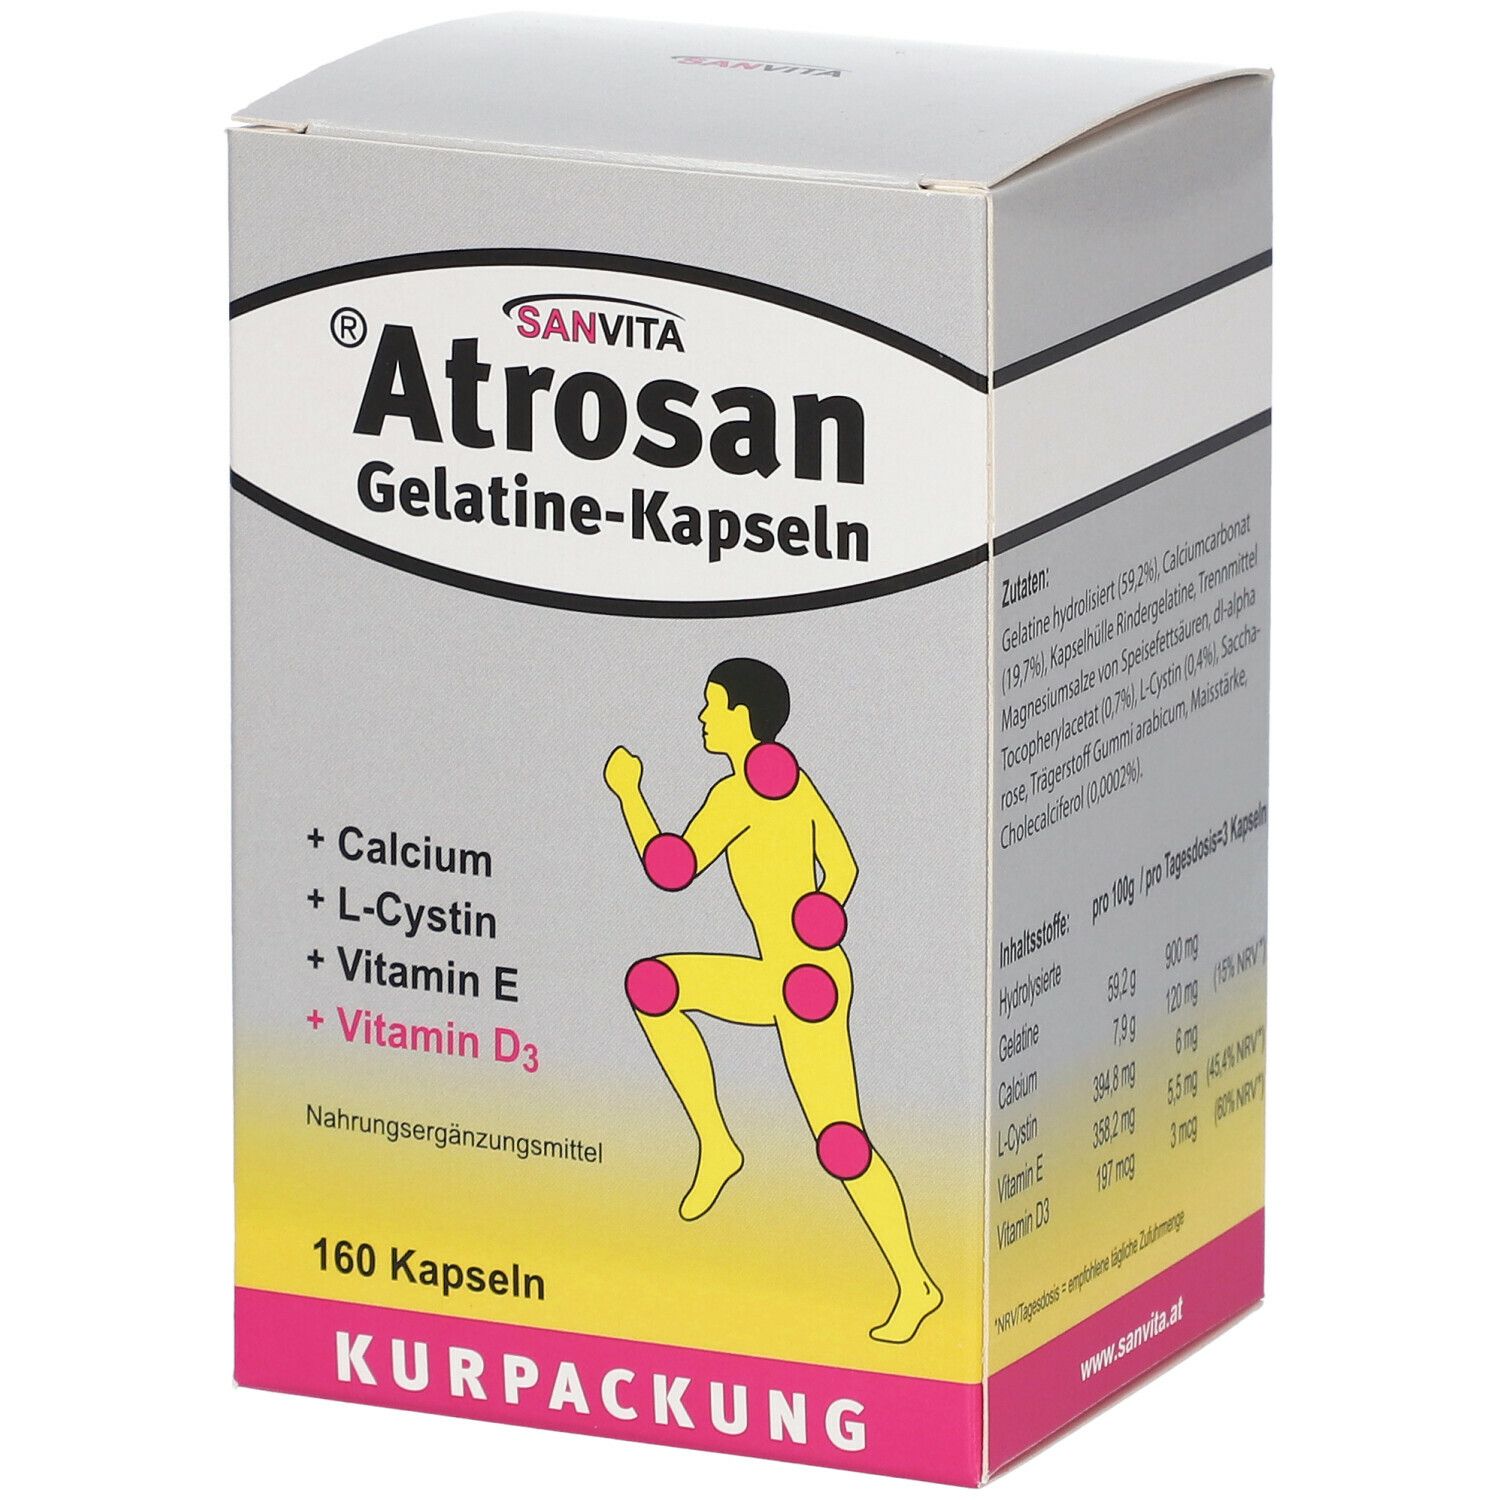 Image of SANVITA® Atrosan Gelantine-Kapseln